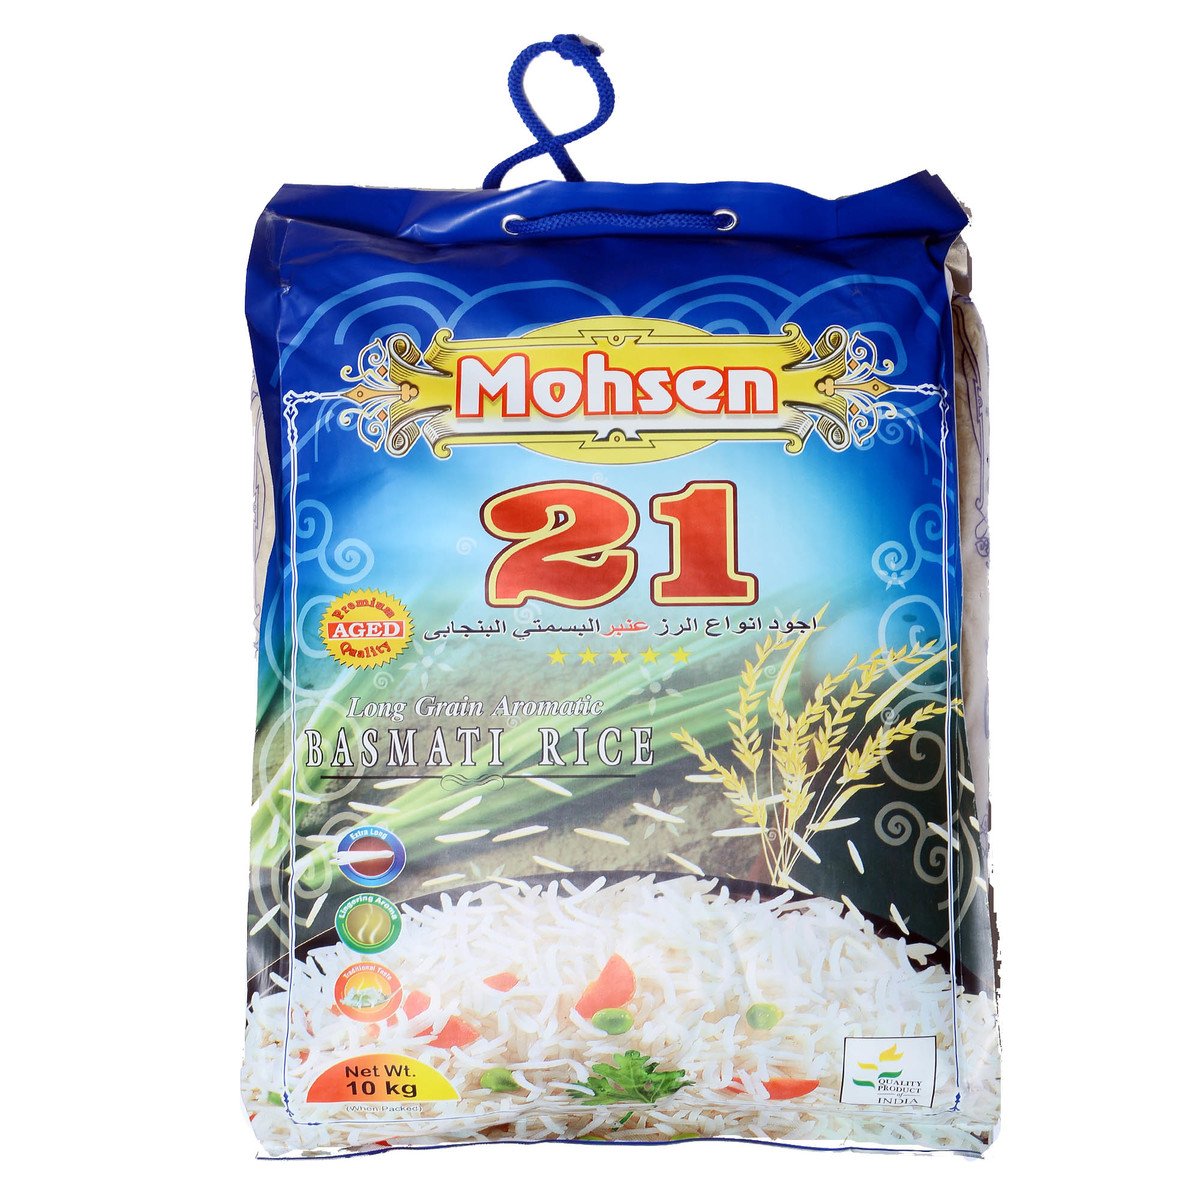 Mohsen 21 Basmati Rice 10kg